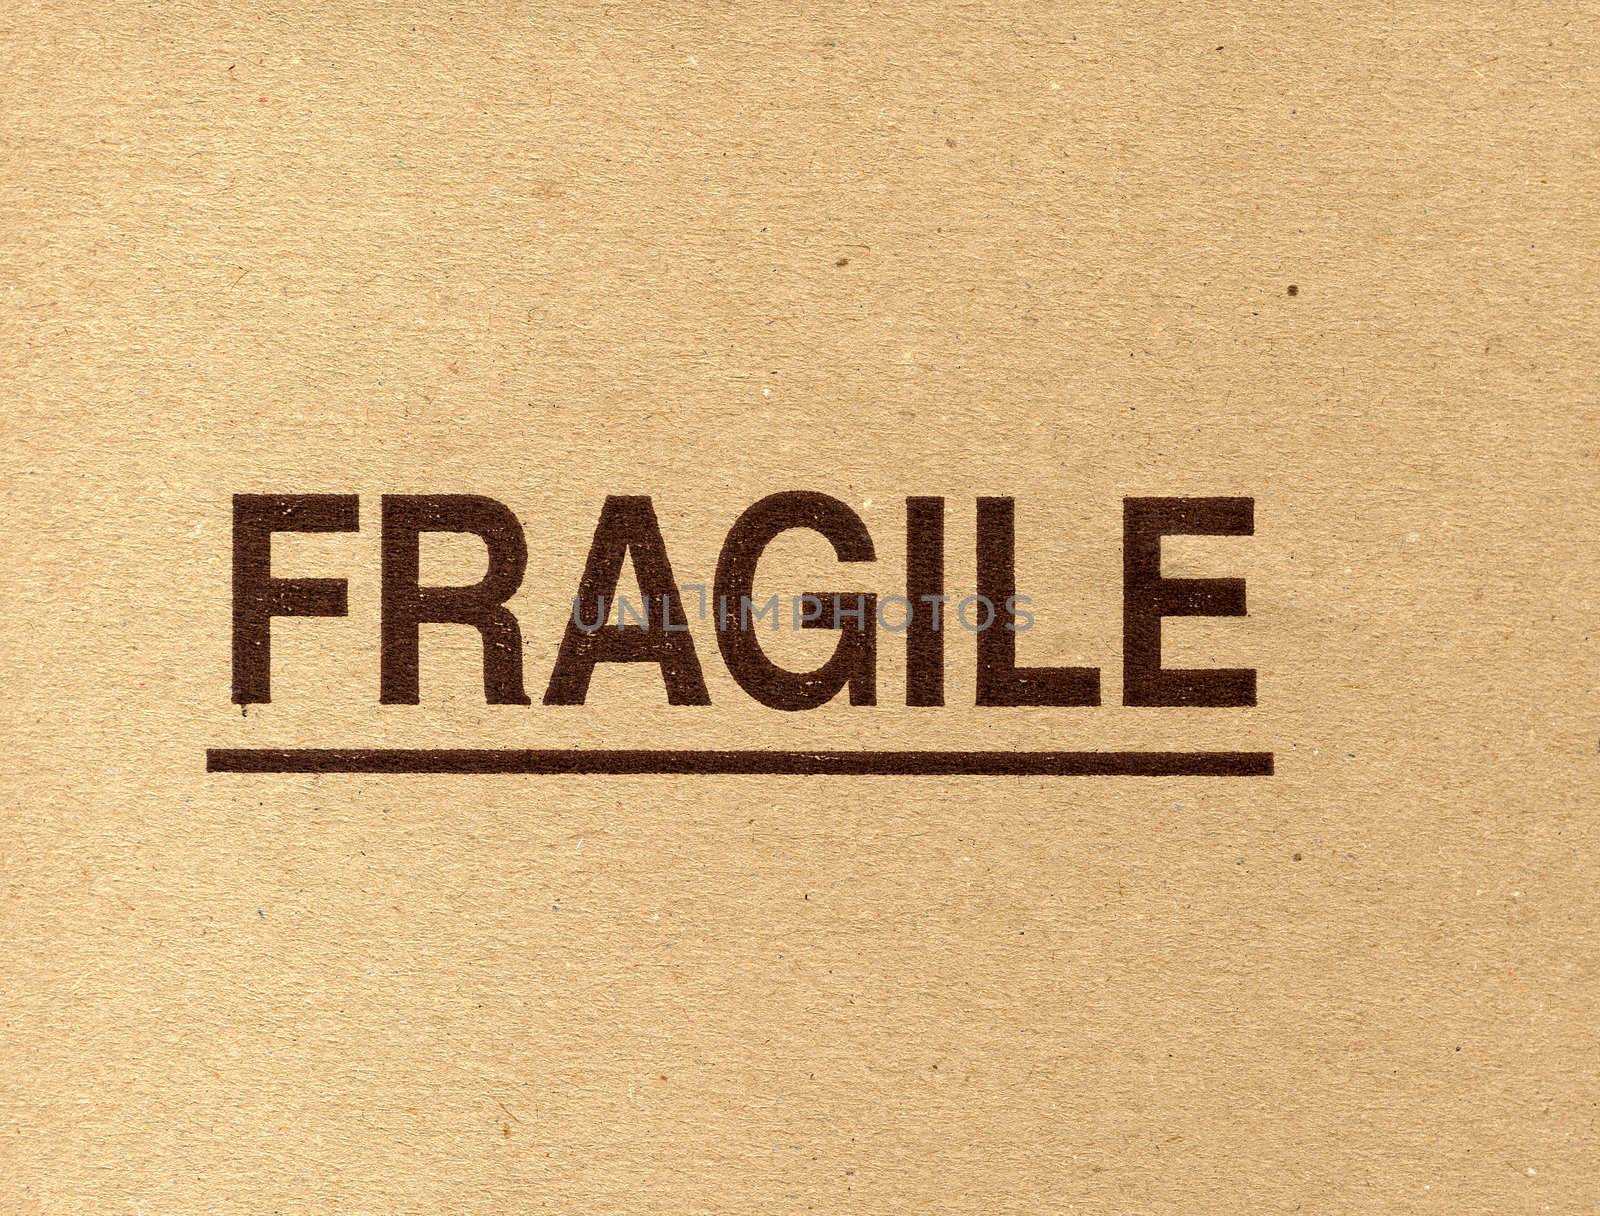 Fragile by claudiodivizia